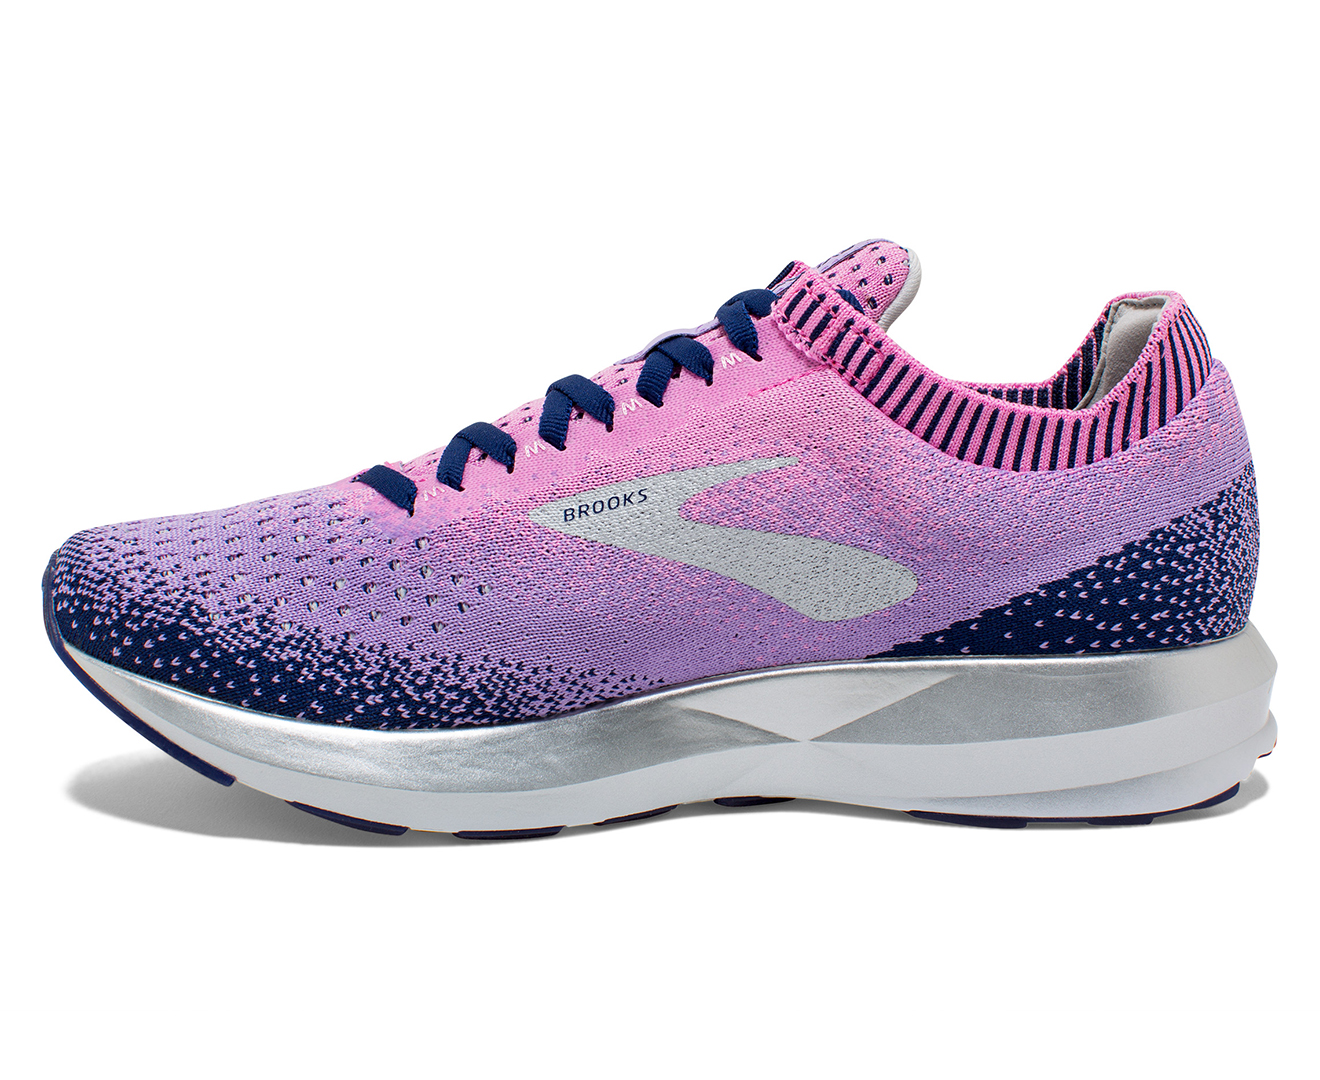 Brooks Women's Levitate 2 Running Shoes - Lilac/Purple/Navy | Catch.com.au